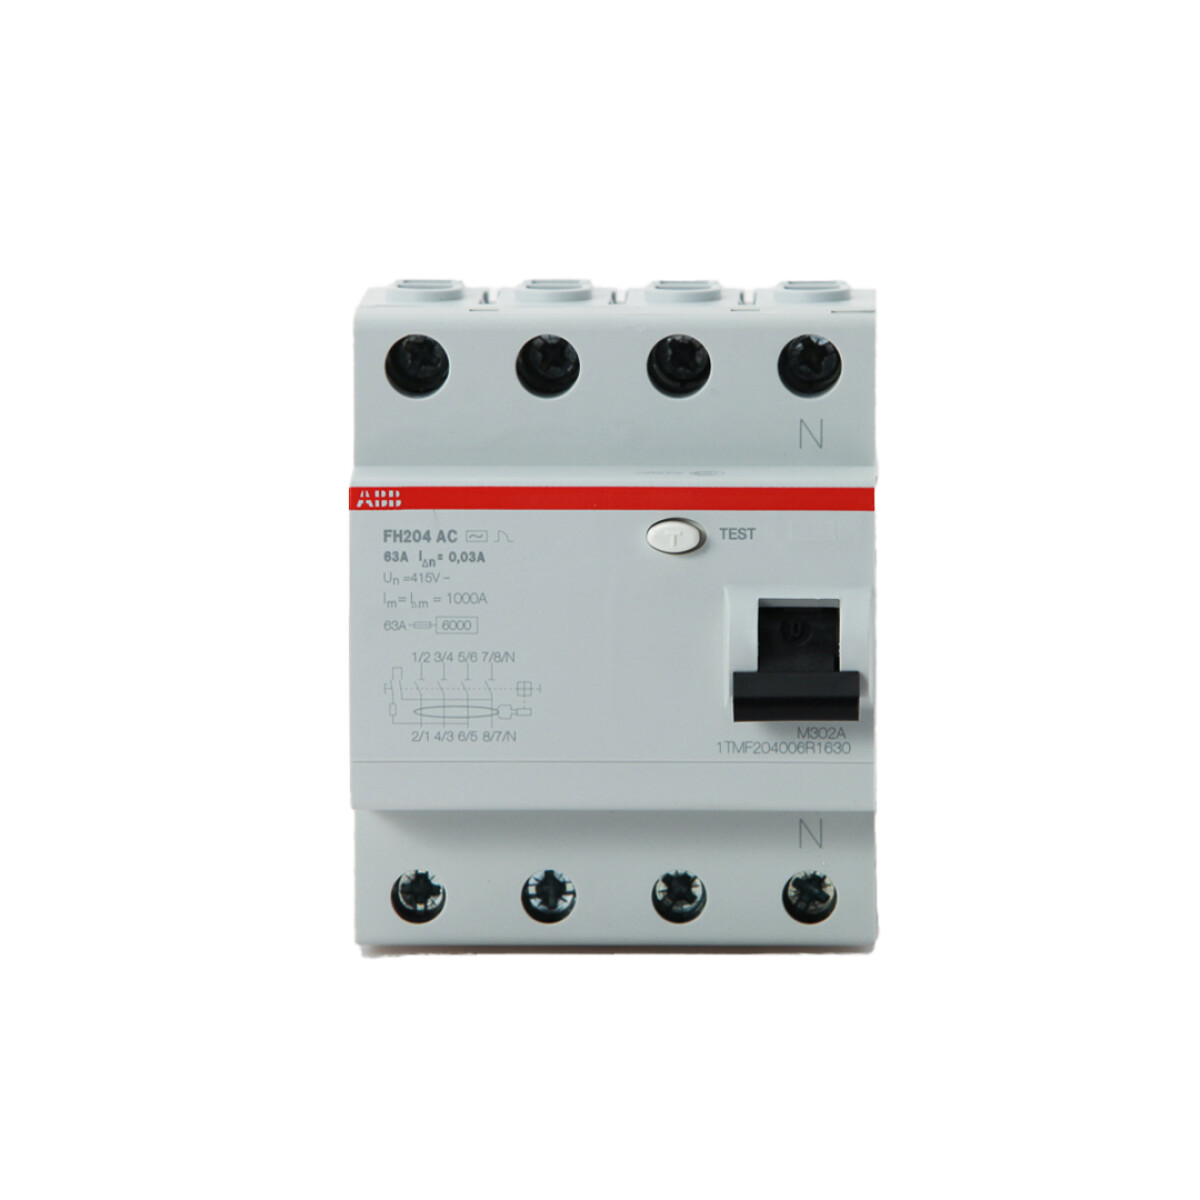 Interruptor diferencial 4P - 6kA - Linea FH200 - ABB - 25A 